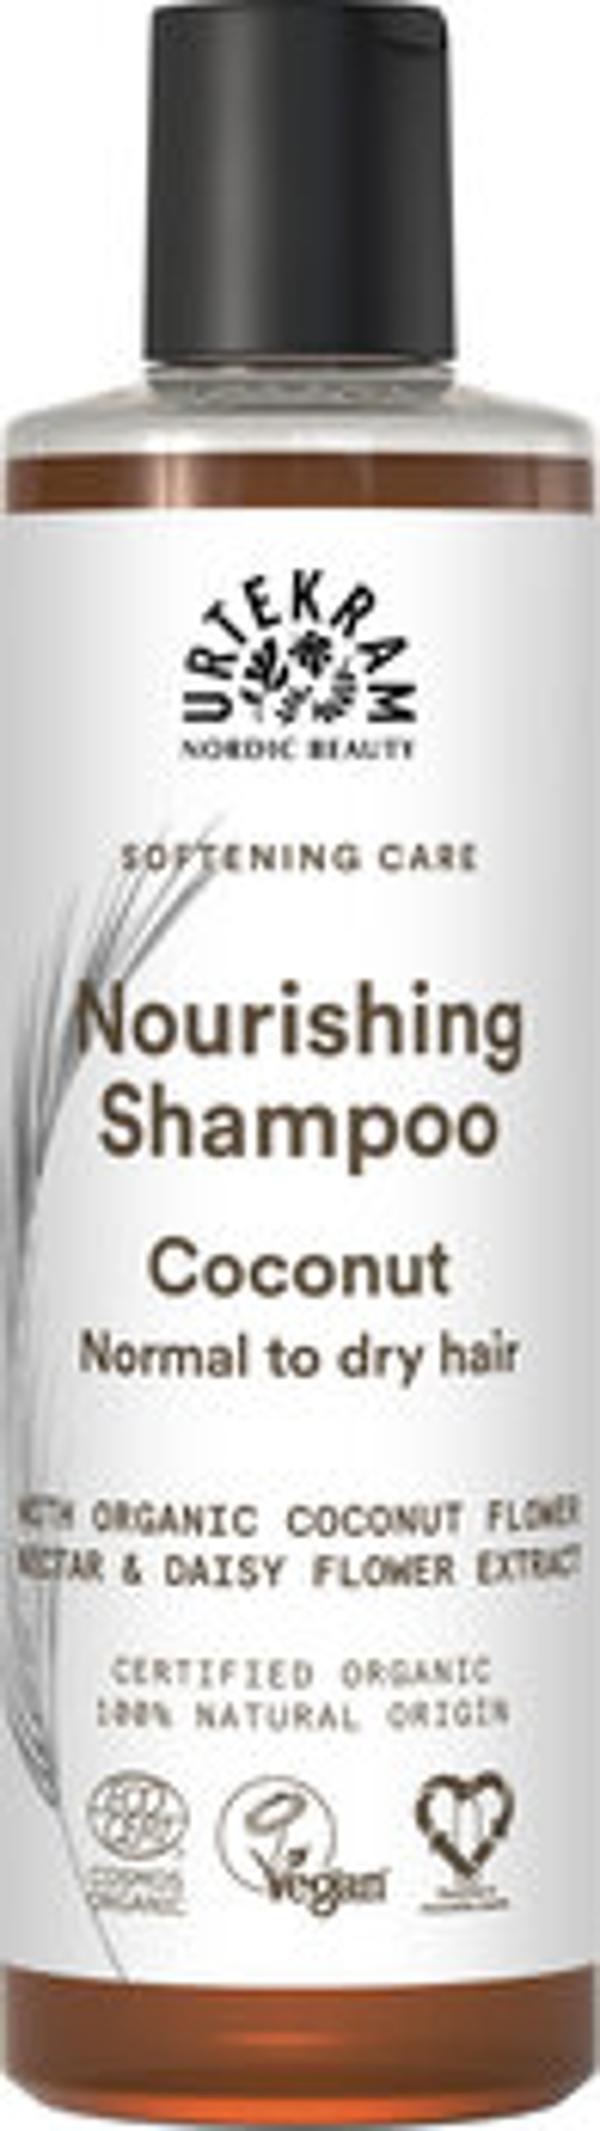 Produktfoto zu Moisturizing Shampoo Coconut